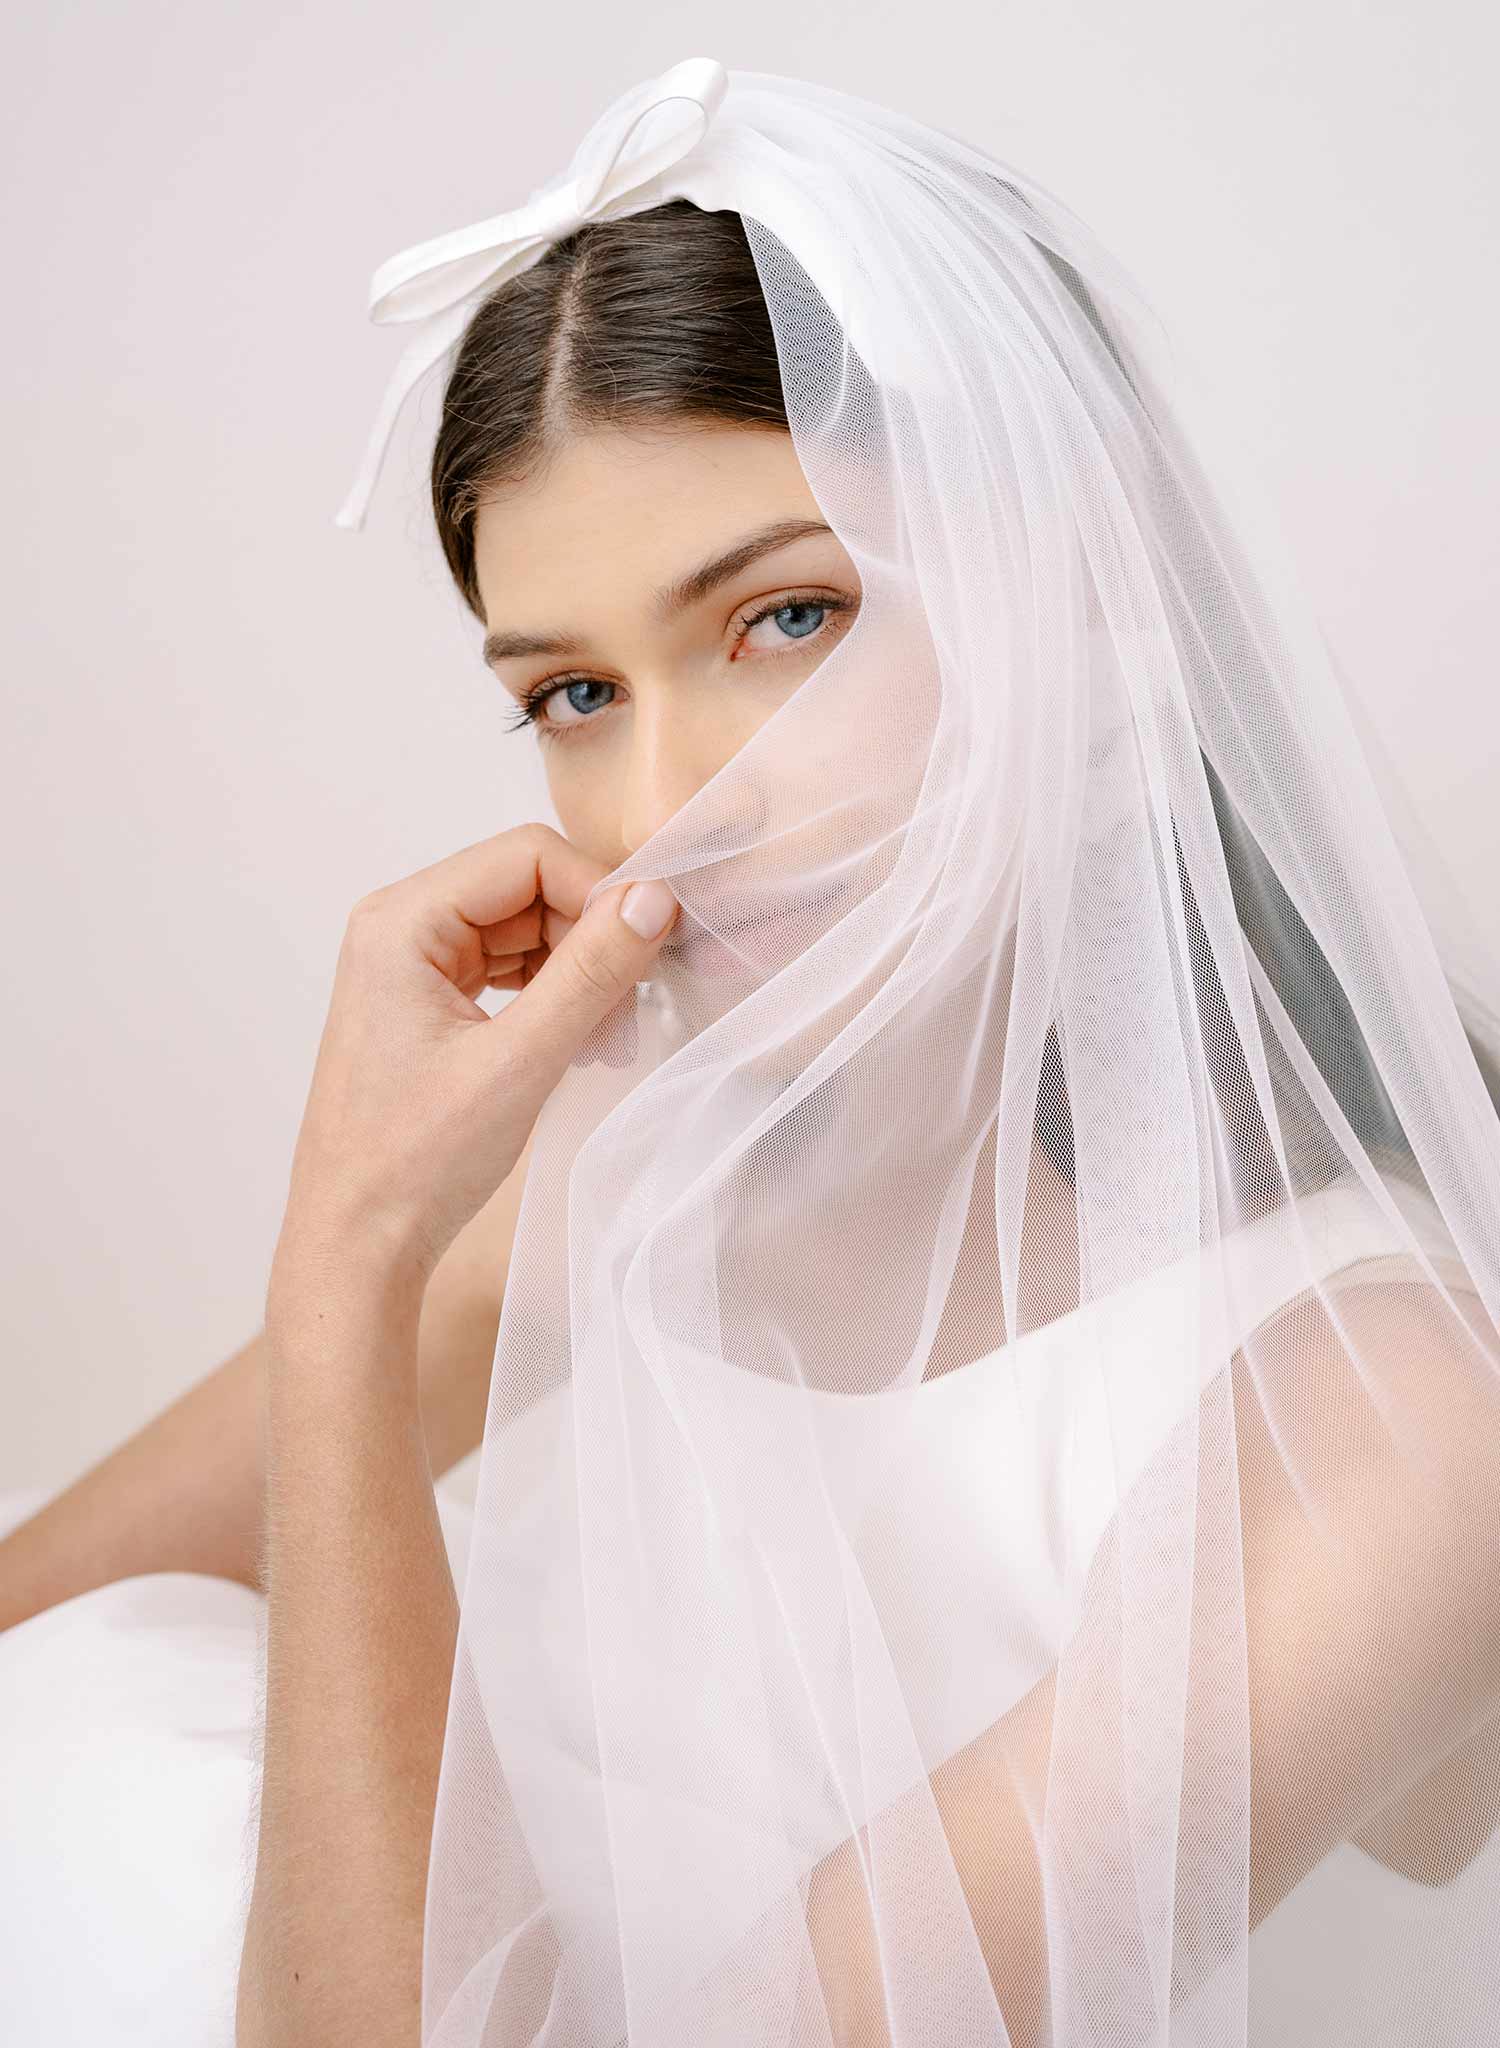 Chapel bridal veil with silk bow - Whisper chapel veil with silk bow -  Style #2369